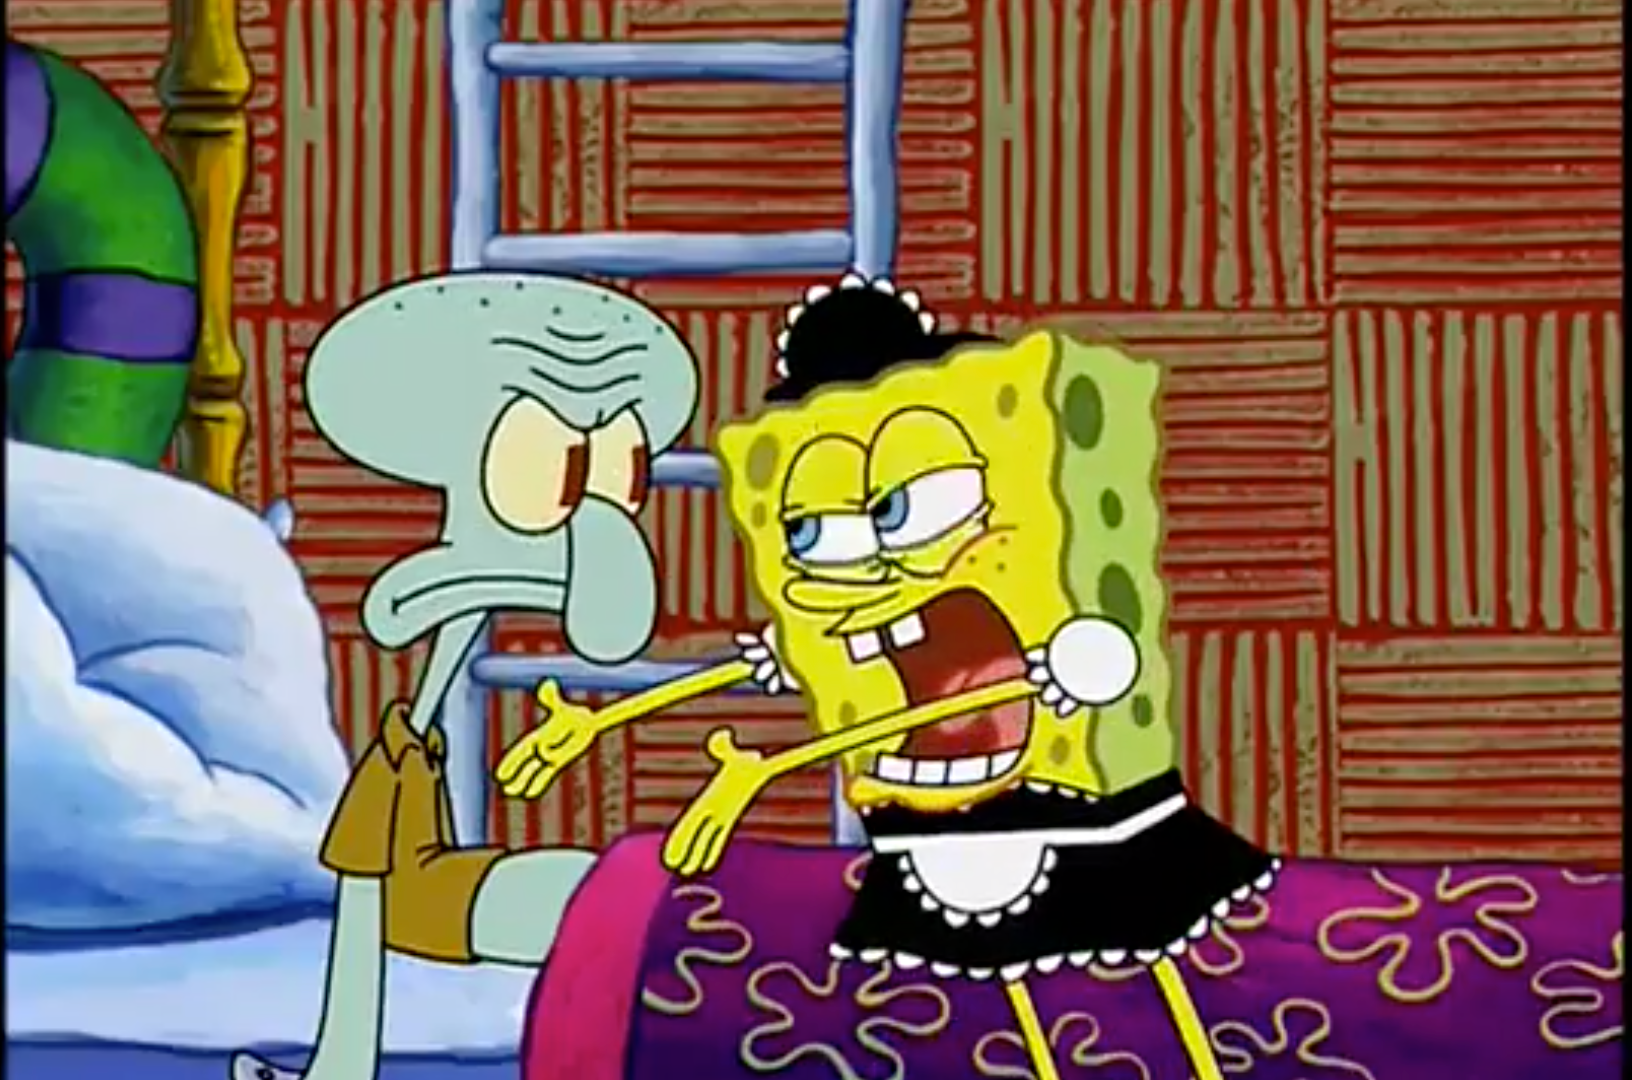 is spongebob gay for squidward